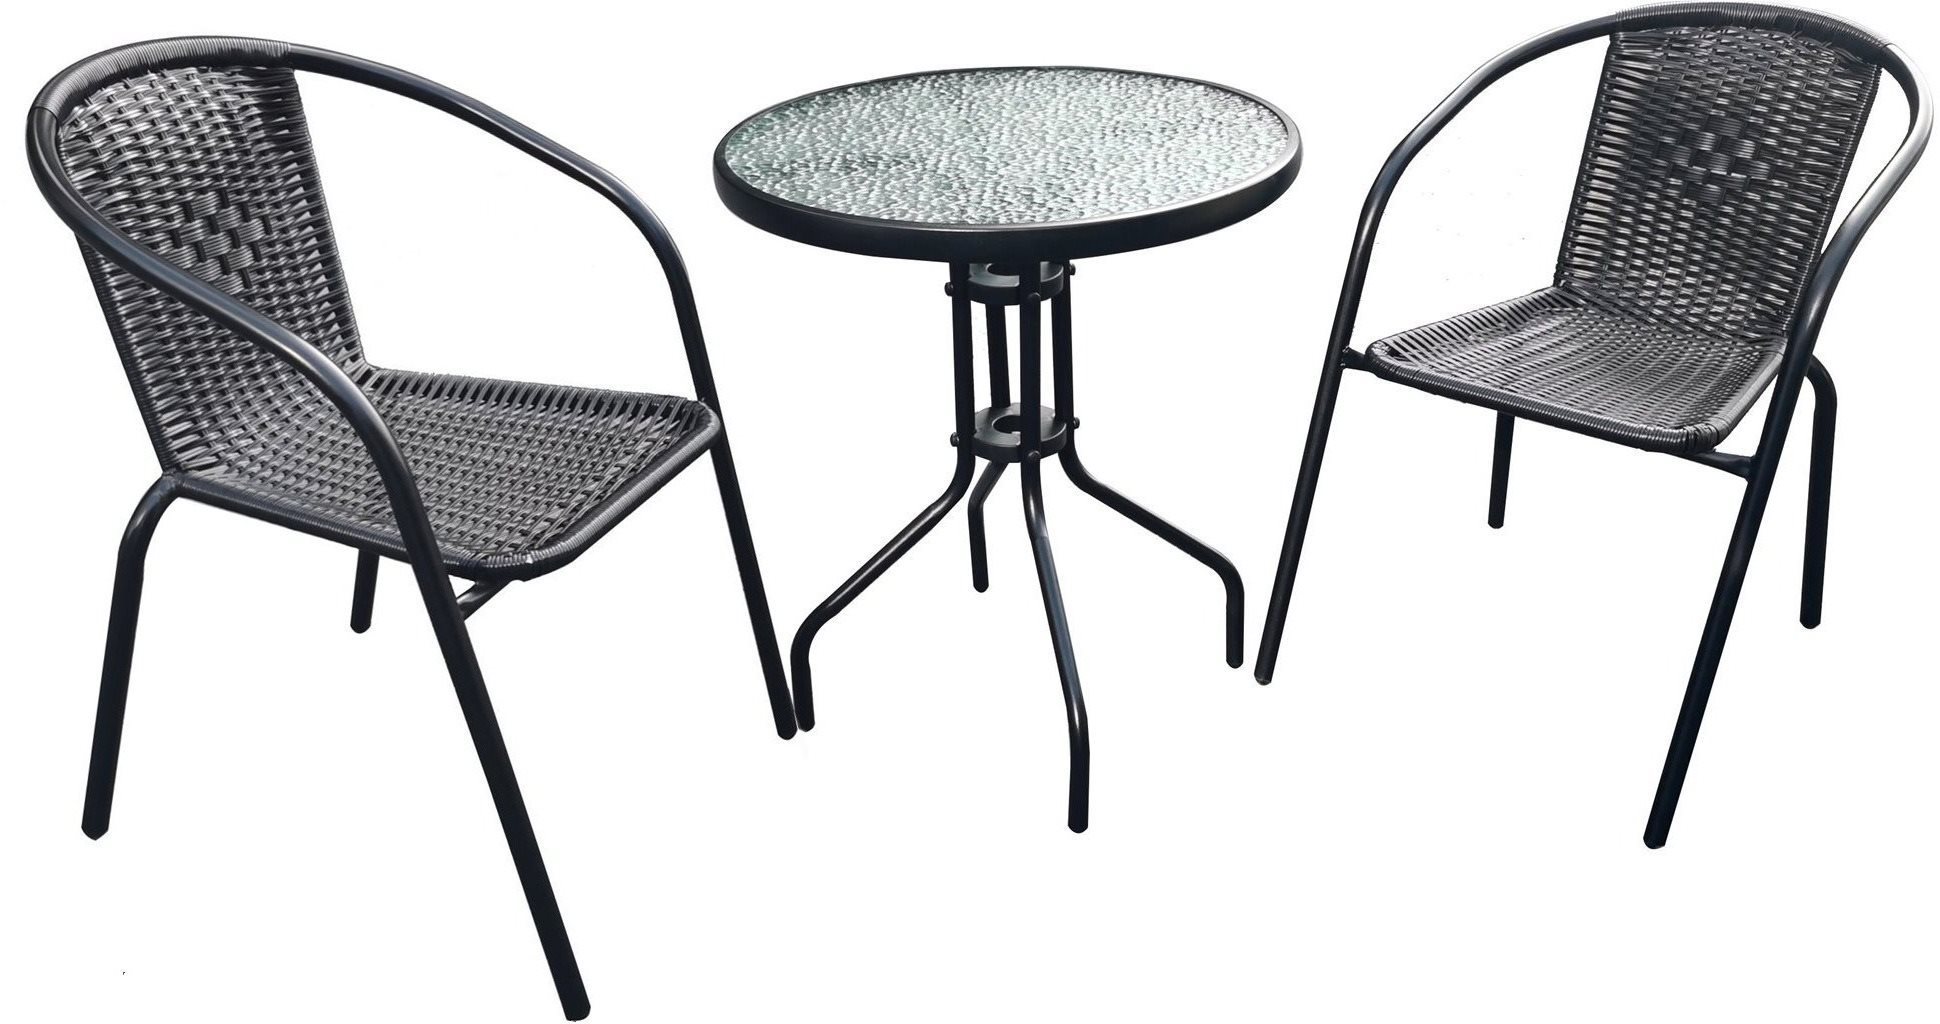 La Proromance Bistro Table G03 + 2 db Bistro Chair R03